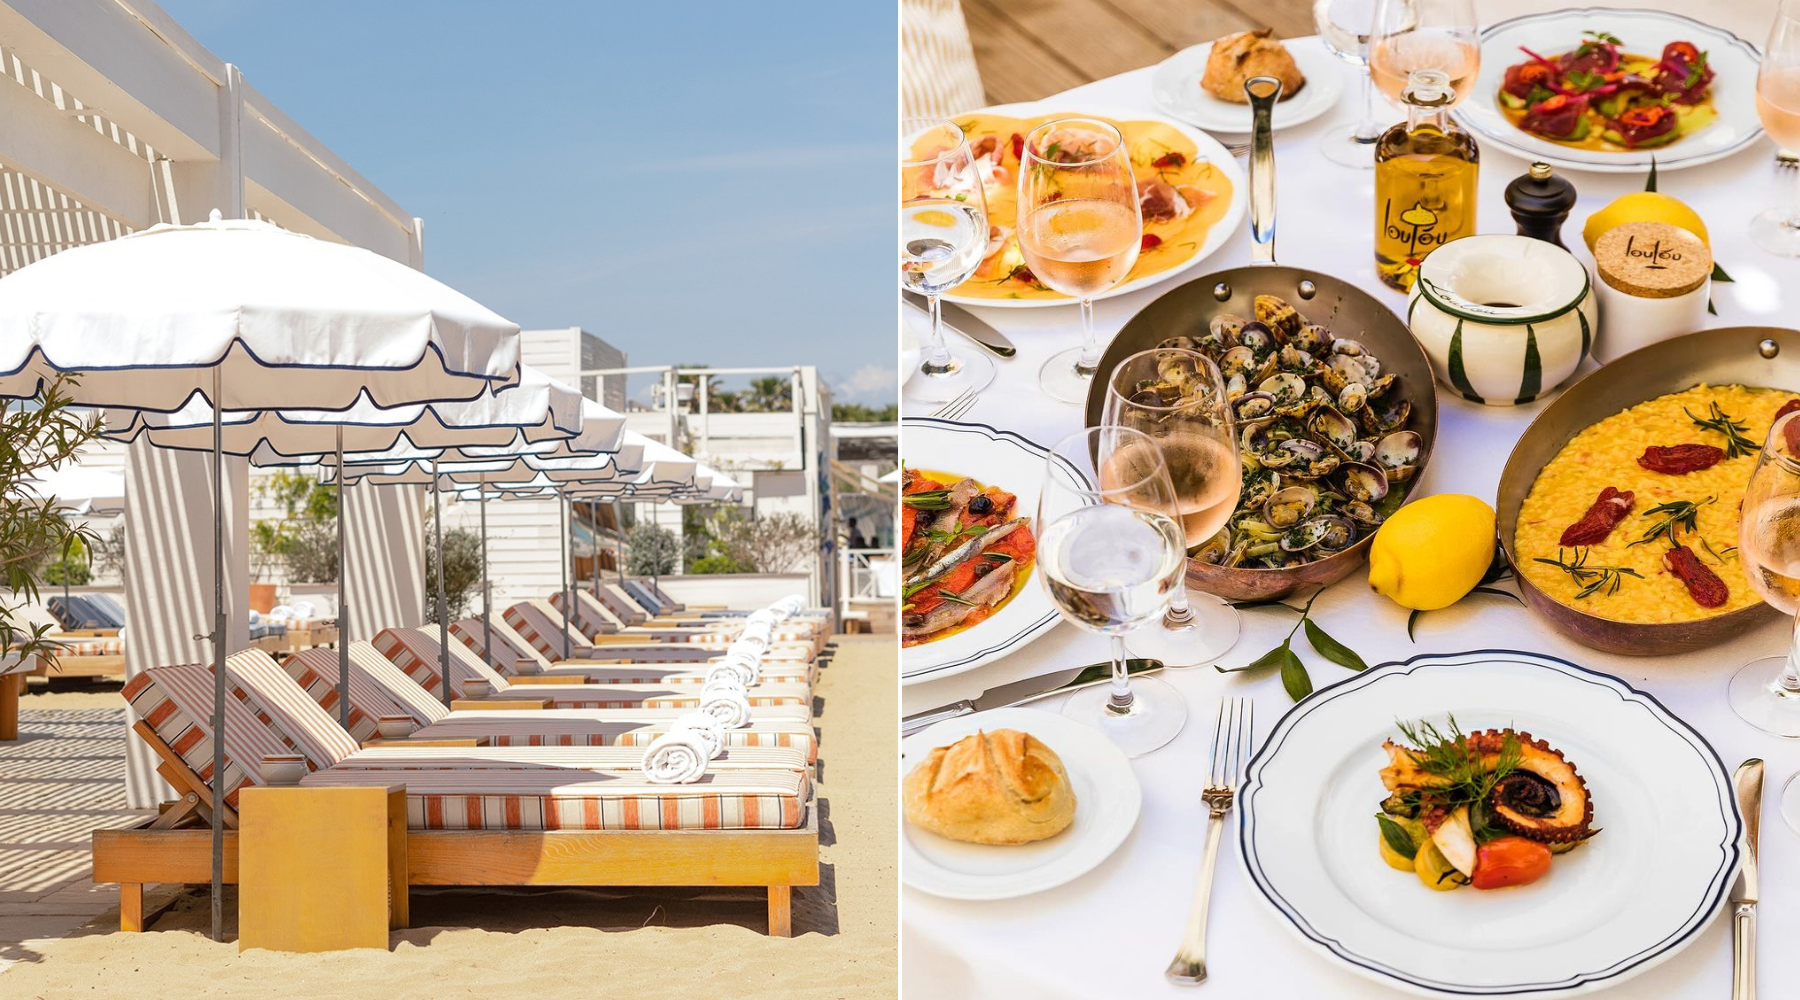 Zabava v Saint-Tropezu: odkrivamo najbolj znane restavracije in bare na plaži